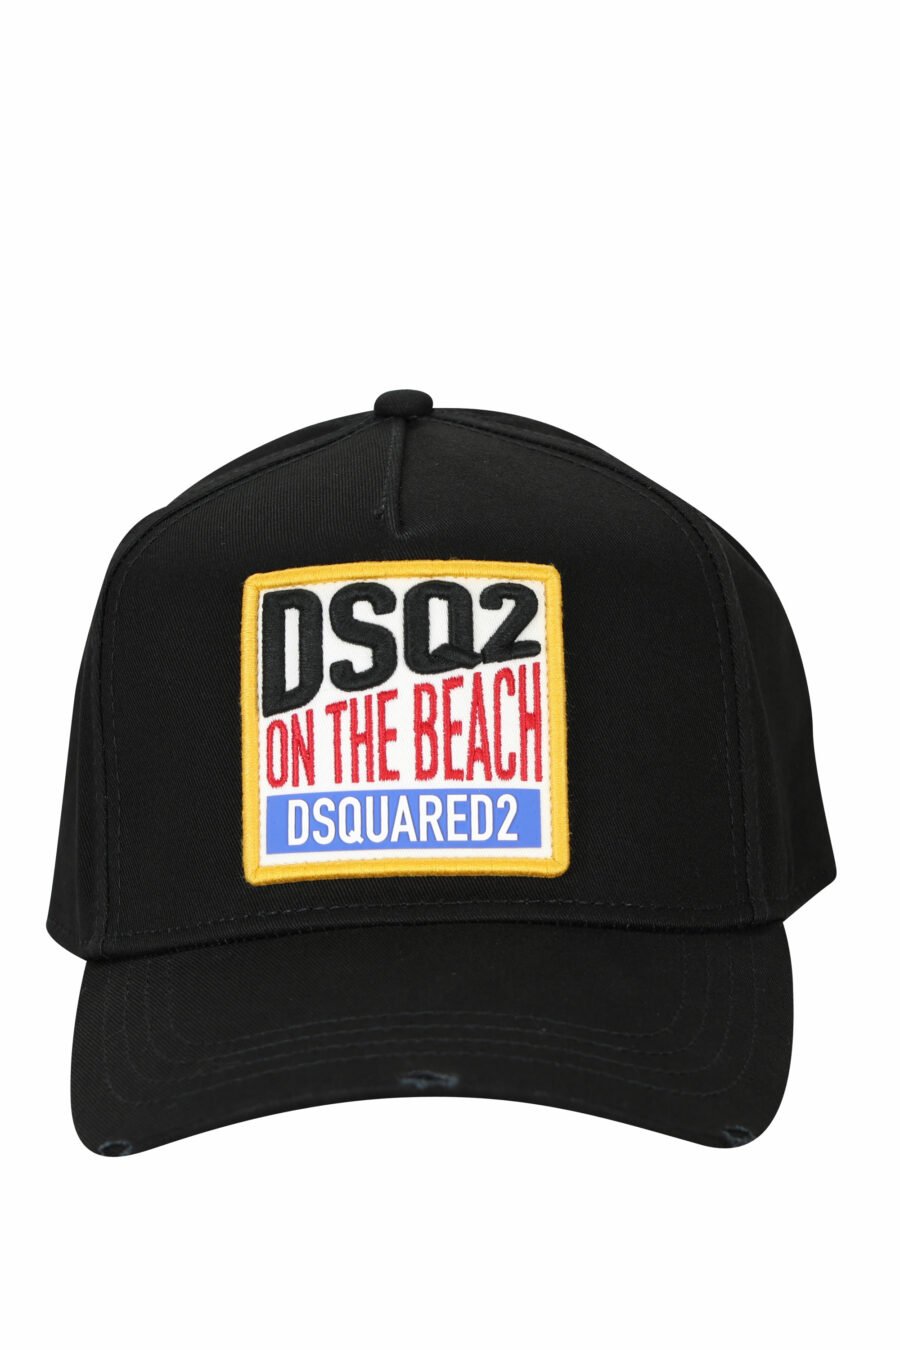 Black cap with "Dsq2 on the beach" box - 8055777286838